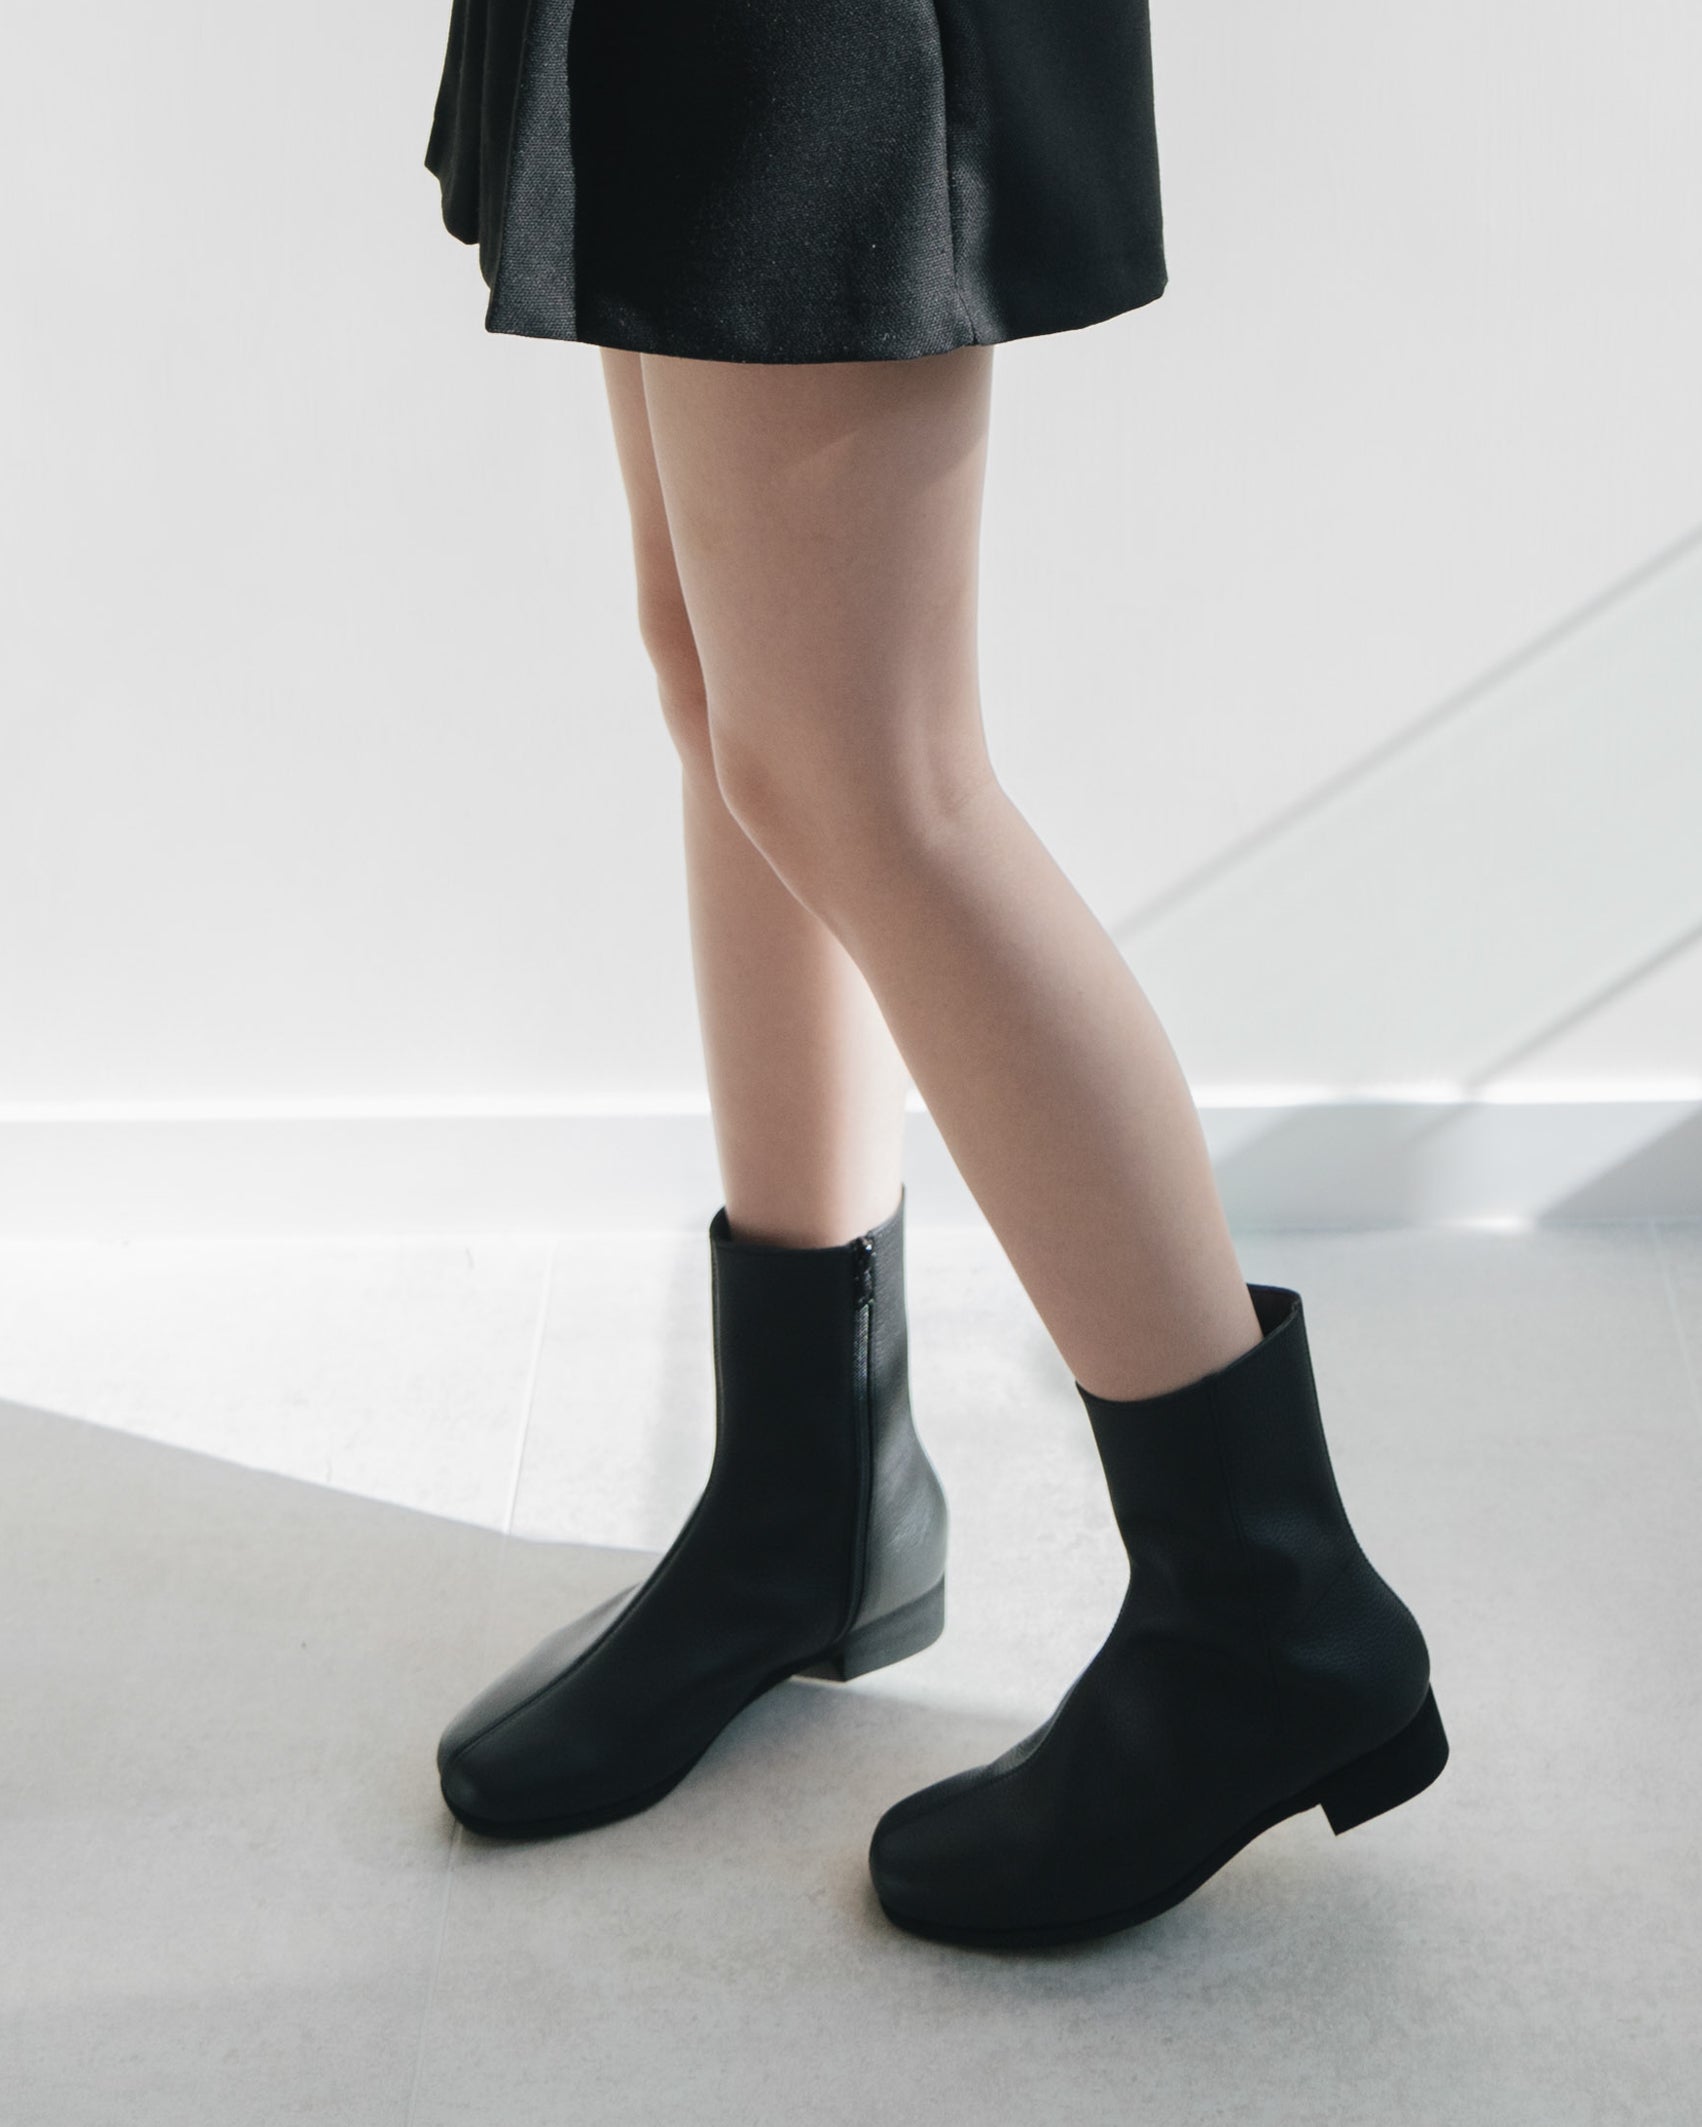 Becca Boots - Classy Black